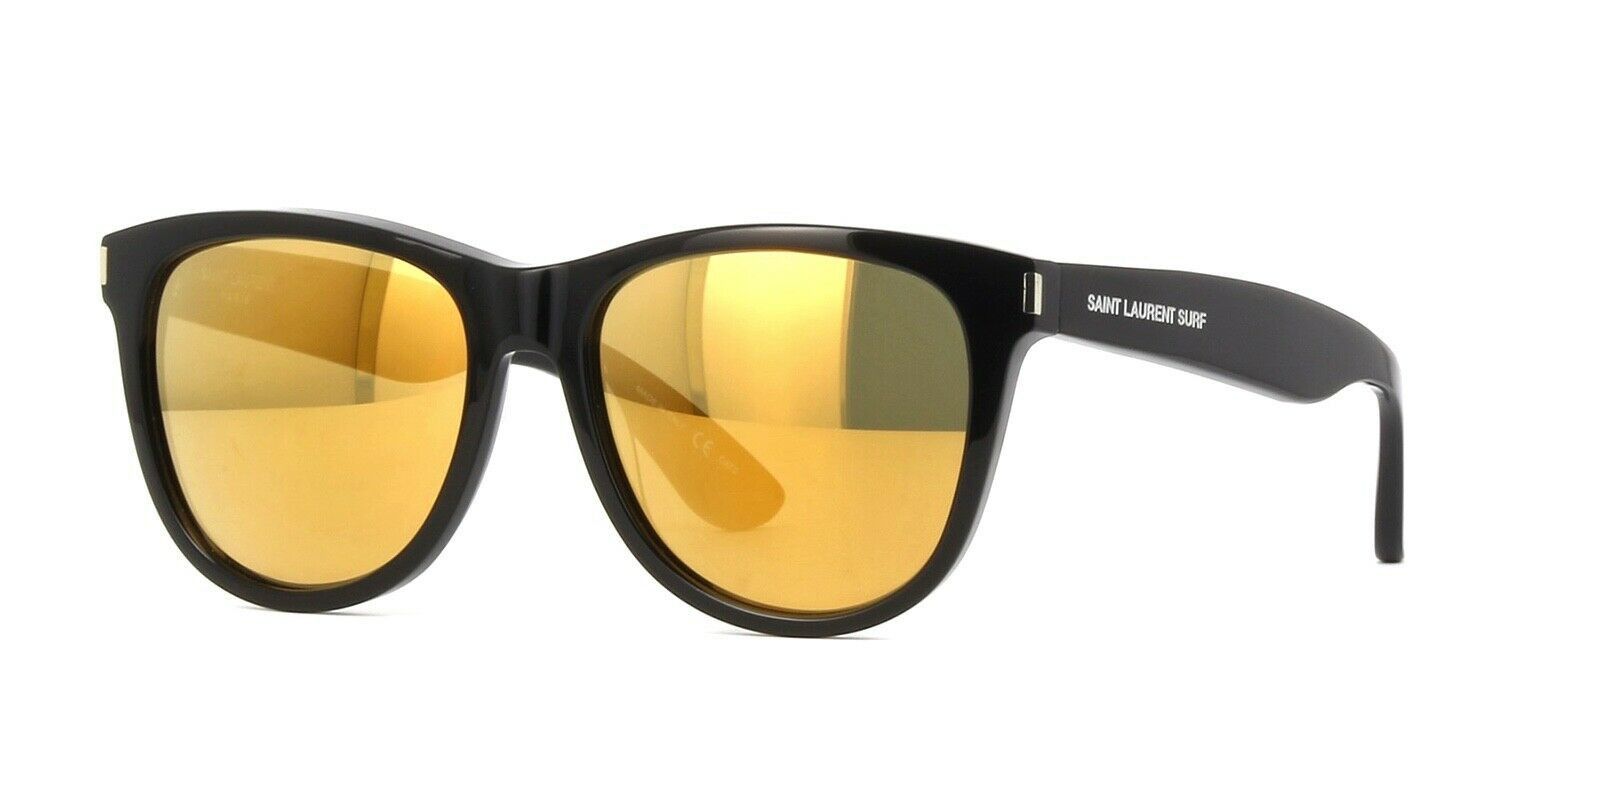 Classic Surf Sunglasses by Saint Laurent for $112.50